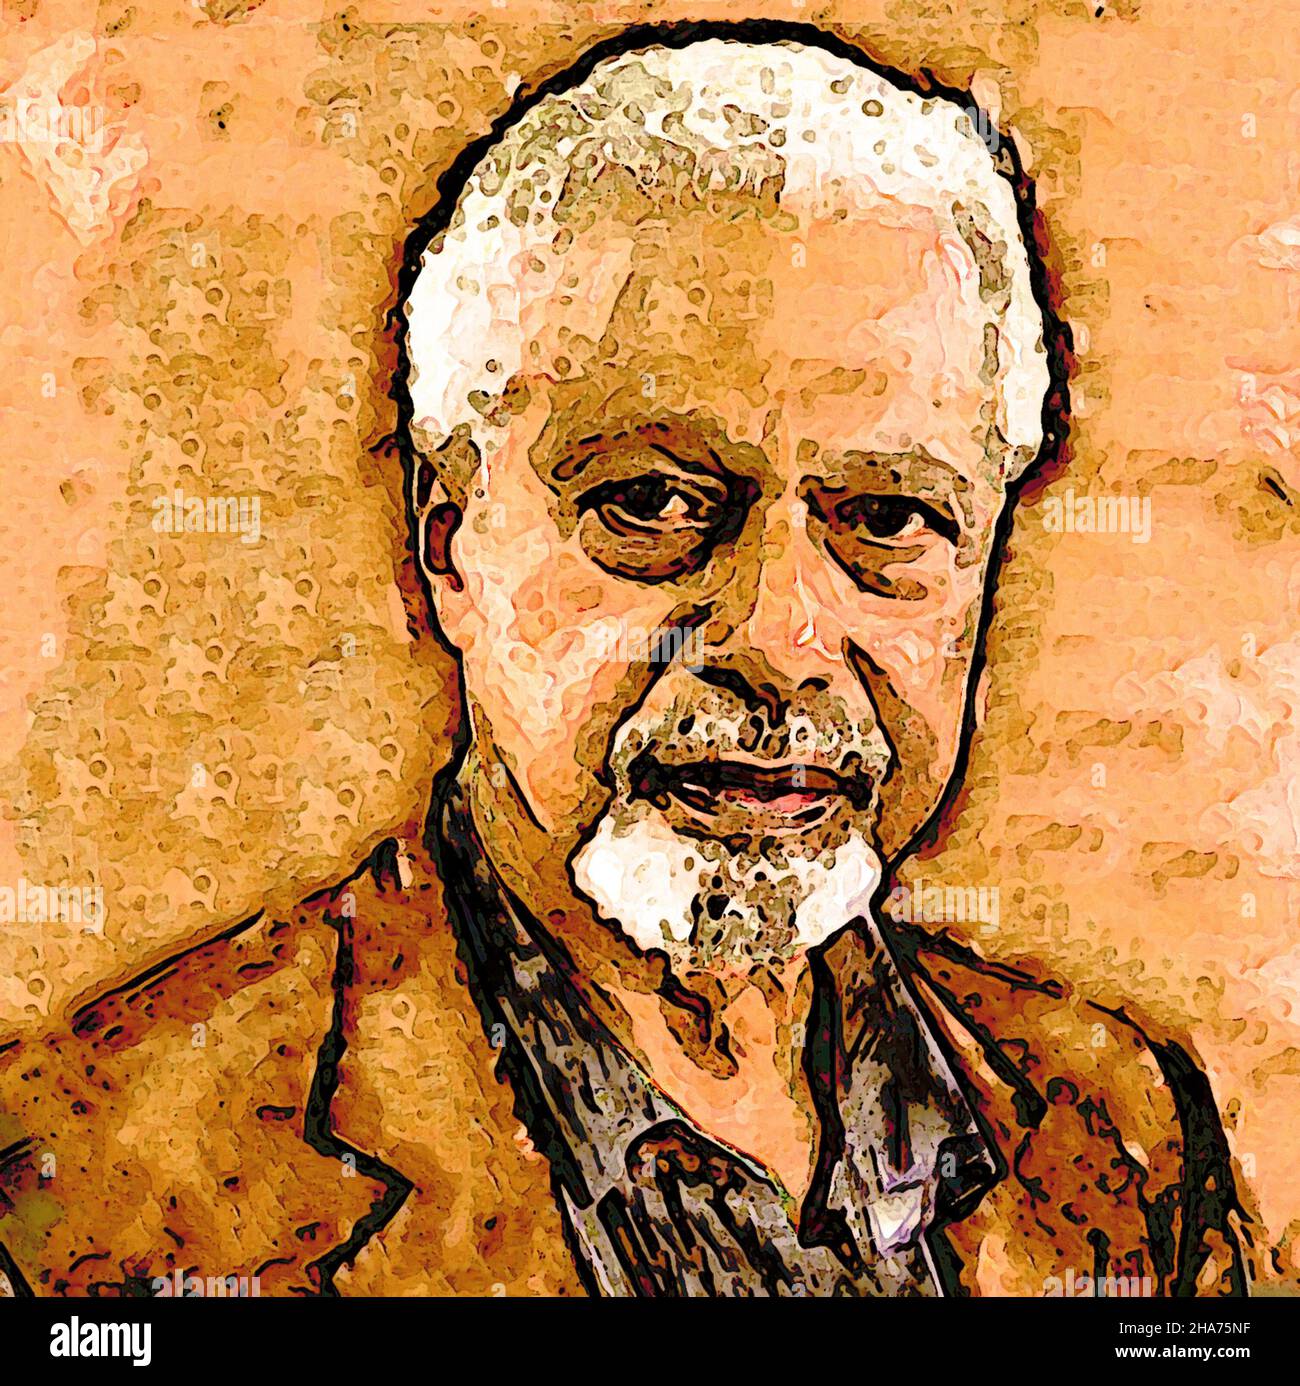 Art illustration, head and shoulder portrait of author, novelist, writer, academic, Abdulrazak Gurnah, winner of the 2021 Nobel Prize for Literature. Stock Photo